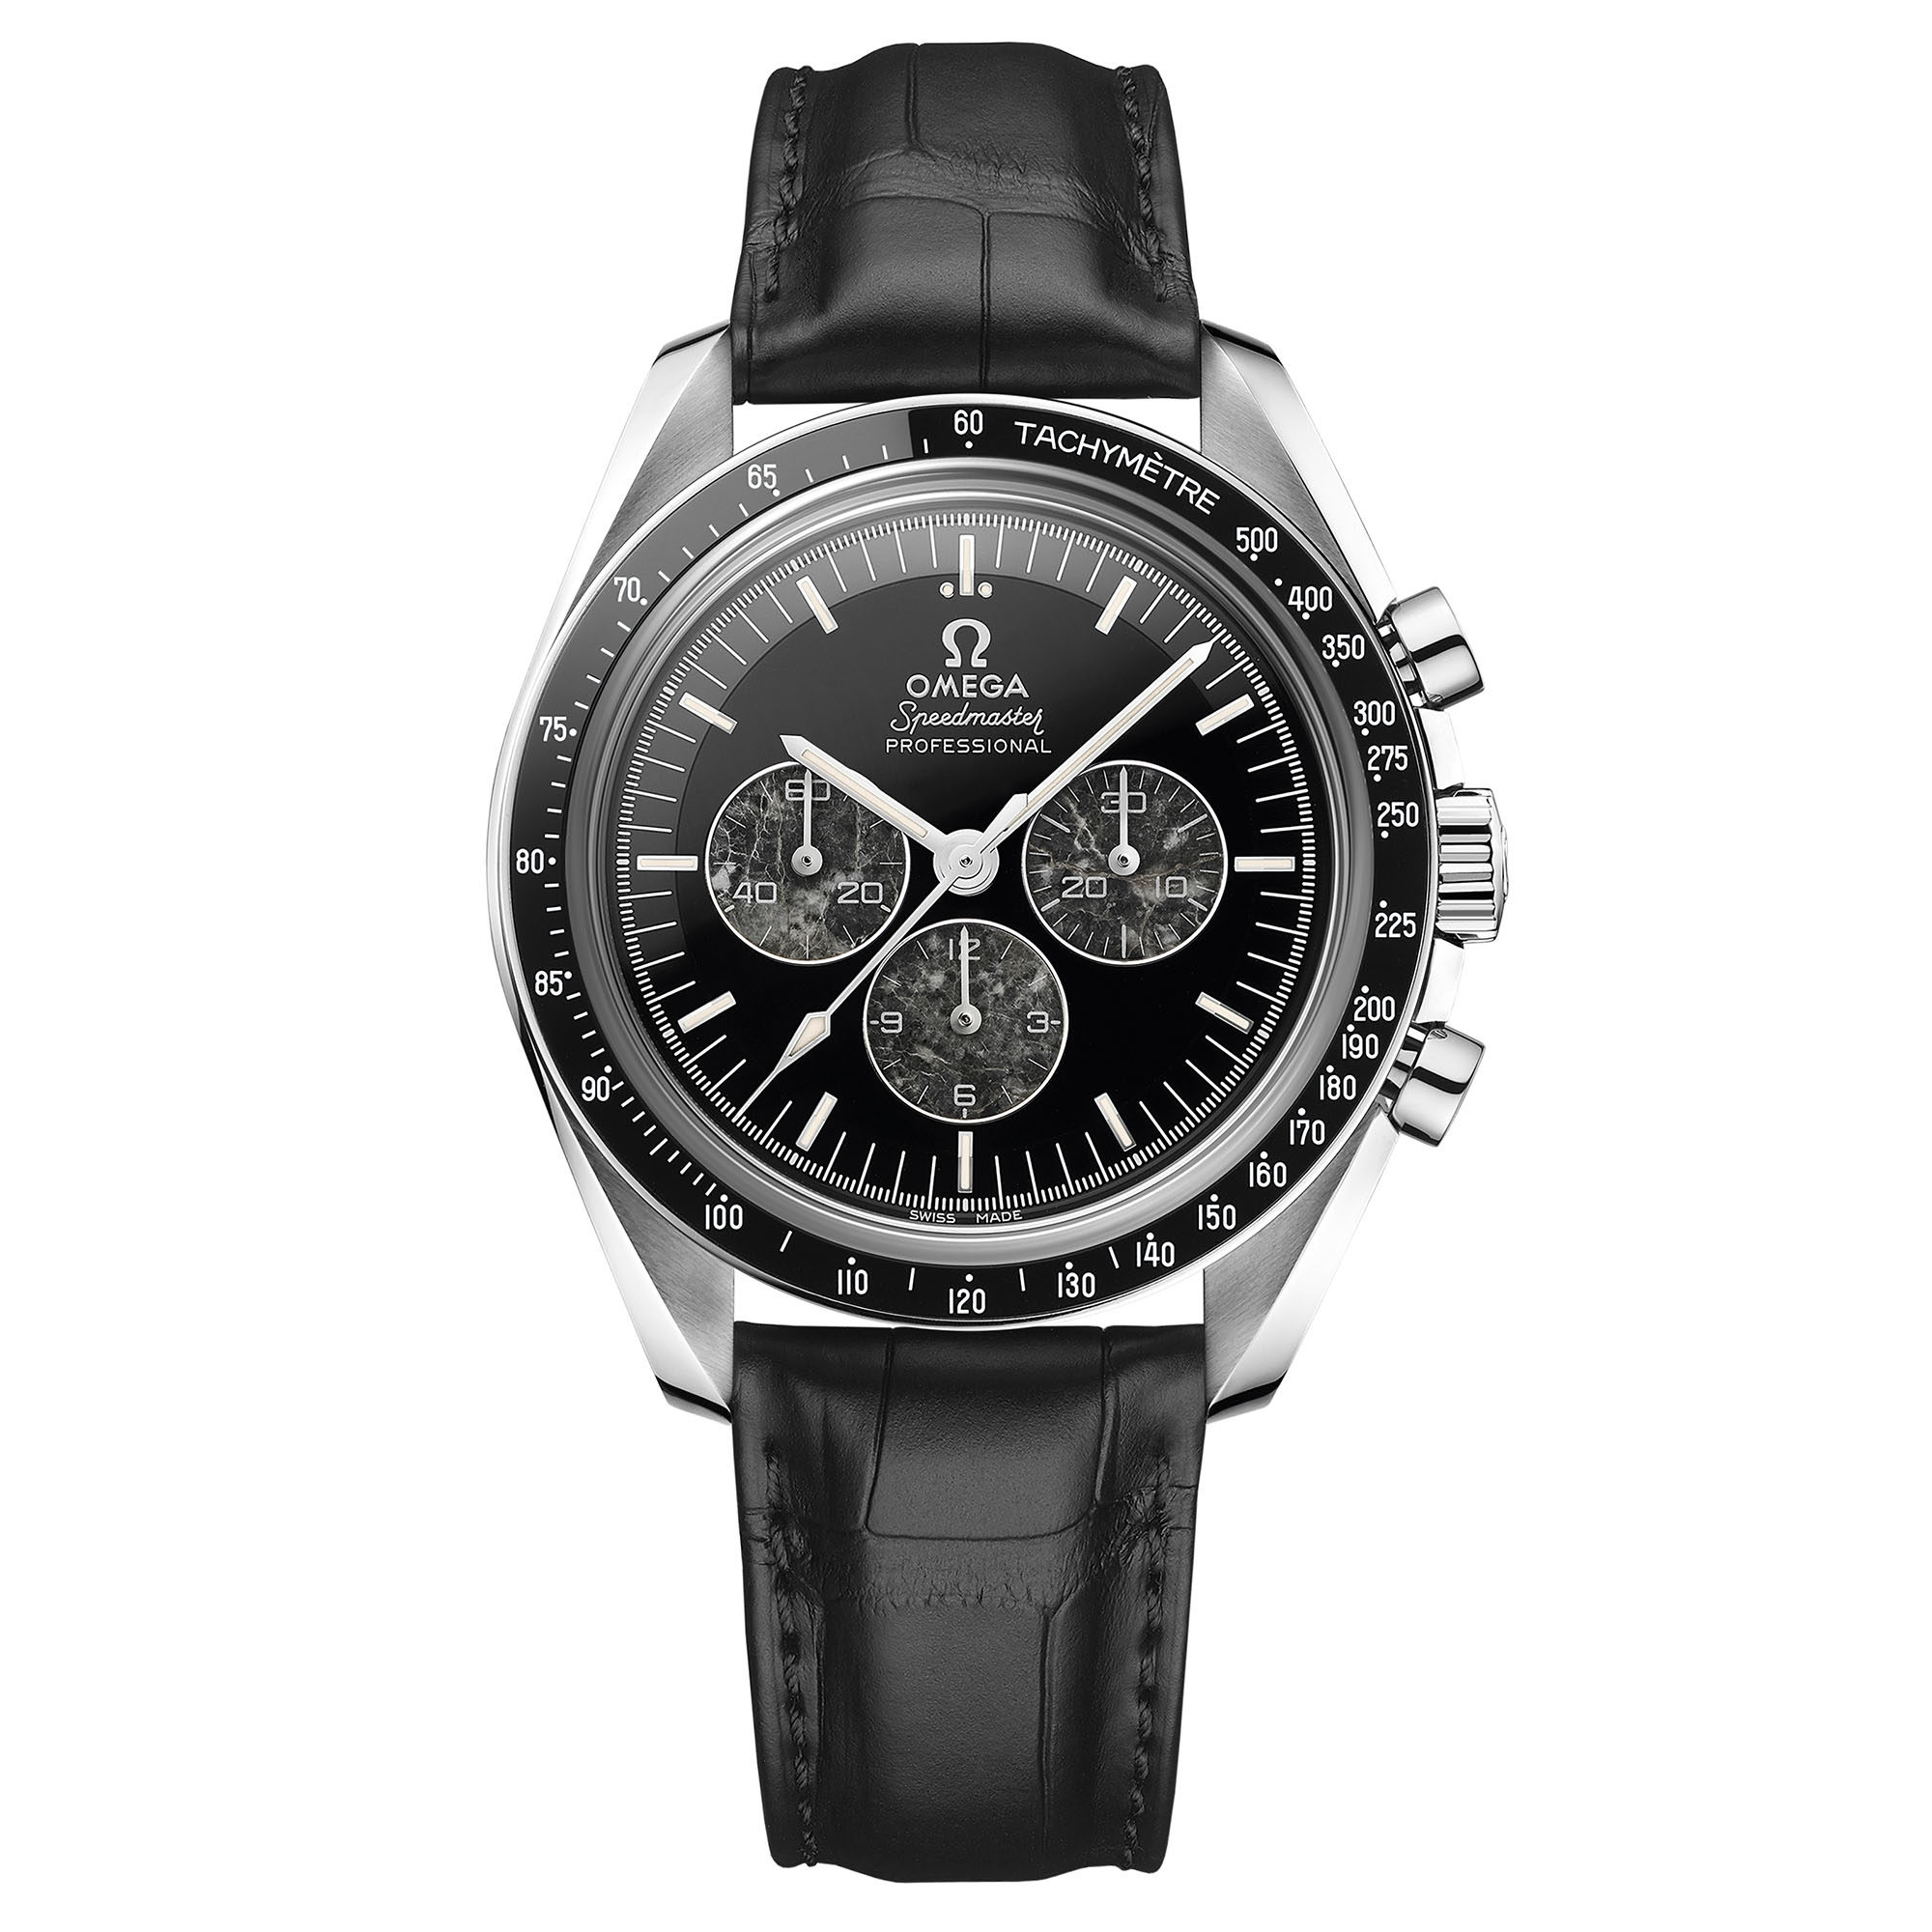 platinum omega watch